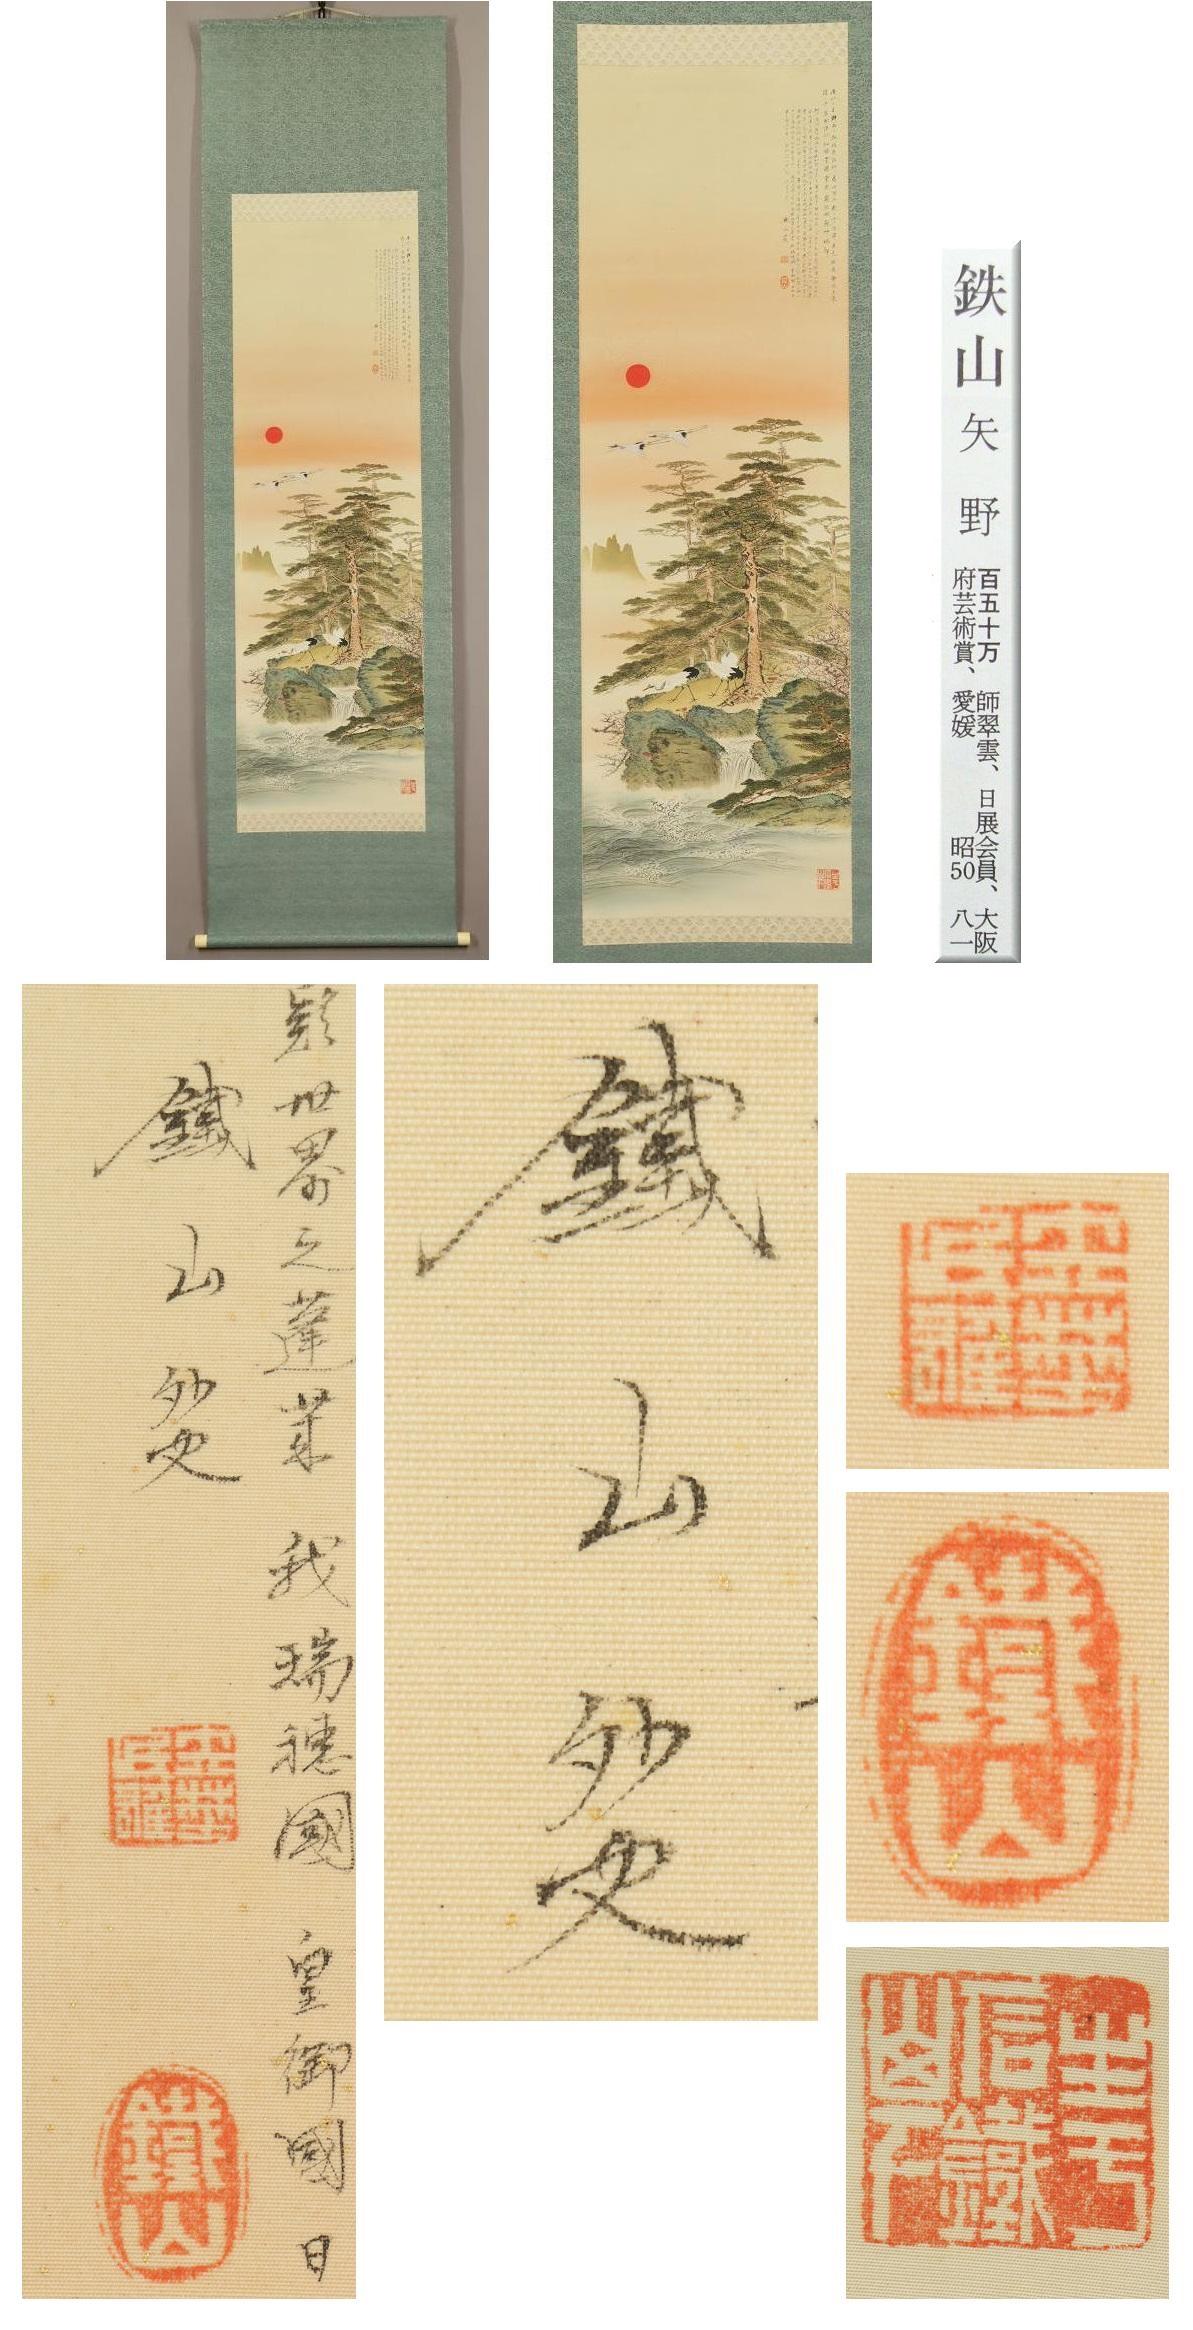 [Authentic work] ◆ Tetsuzan Yano ◆ Horai Sekkaku ◆ Landscape ◆ Double box ◆ Ehime Prefecture ◆ Hand-painted ◆ Silk ◆ Hanging scroll ◆ 

Tetsuzan Yano [Yano Tetsuzan]
Art Yearbook appraised value: 1.5 million yen]
1894 (Meiji 27) - 1975 (Showa